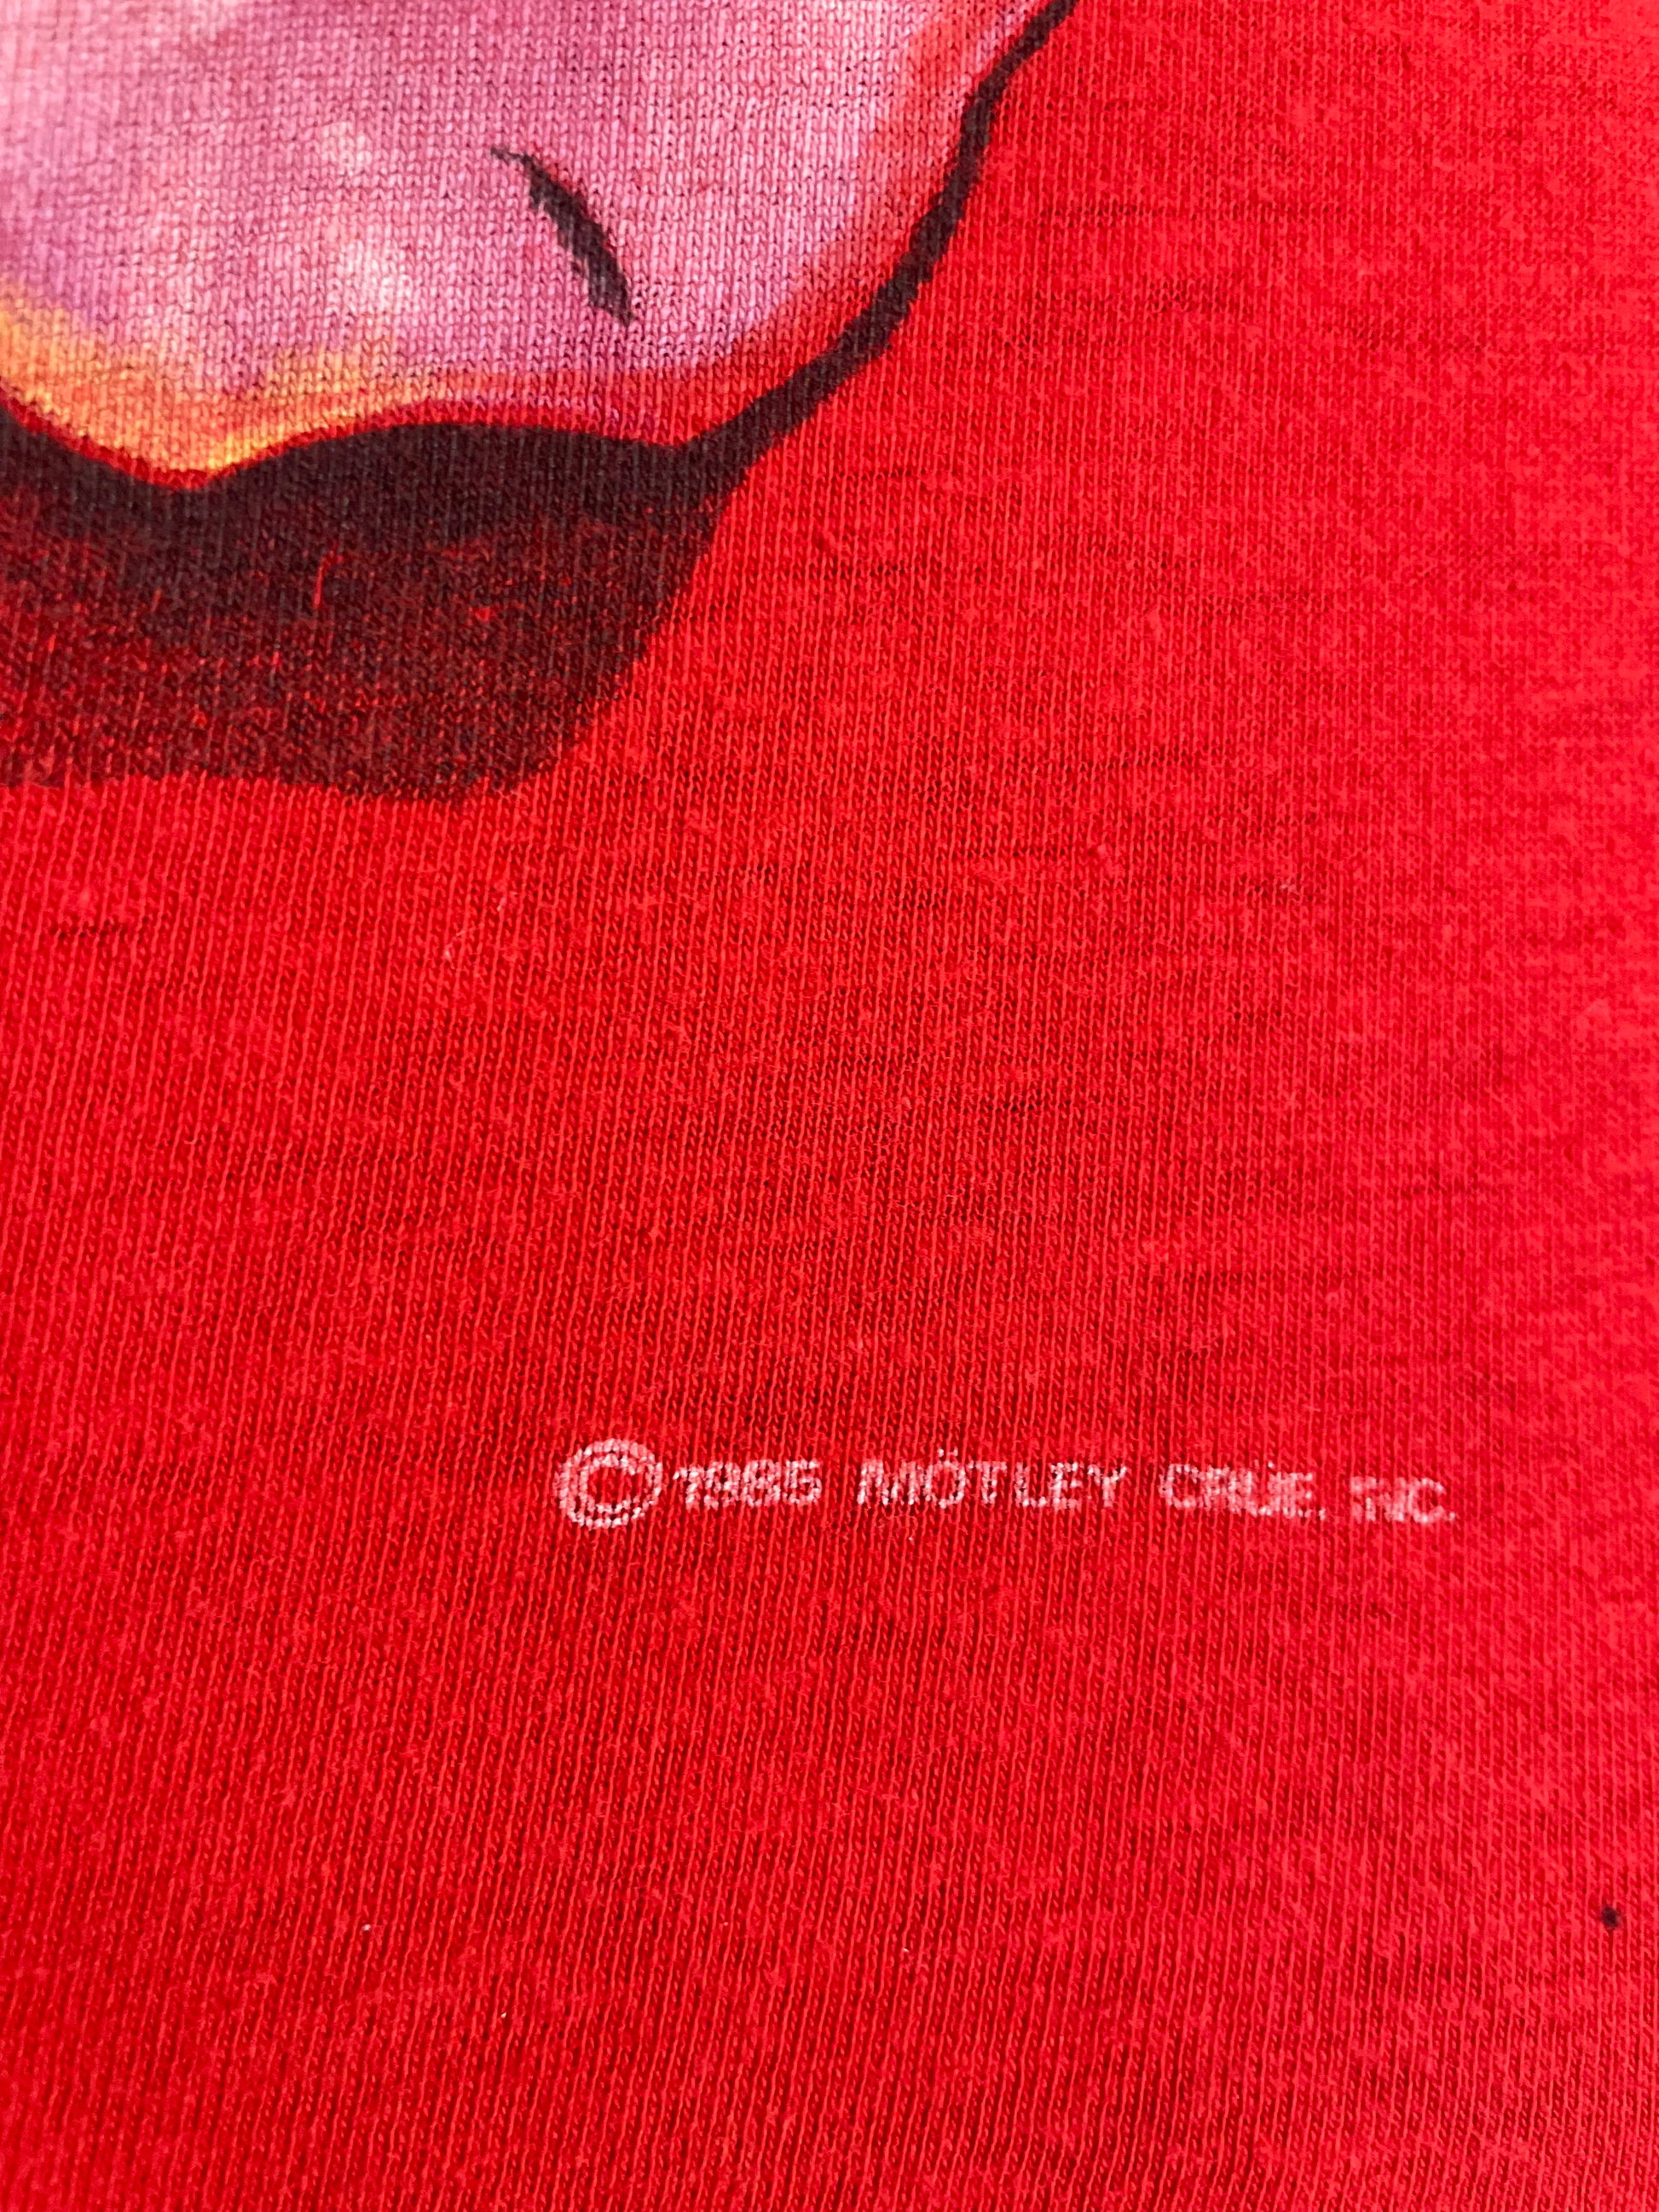 Vintage 1985 Motley Crue T-shirt - Spark Pretty